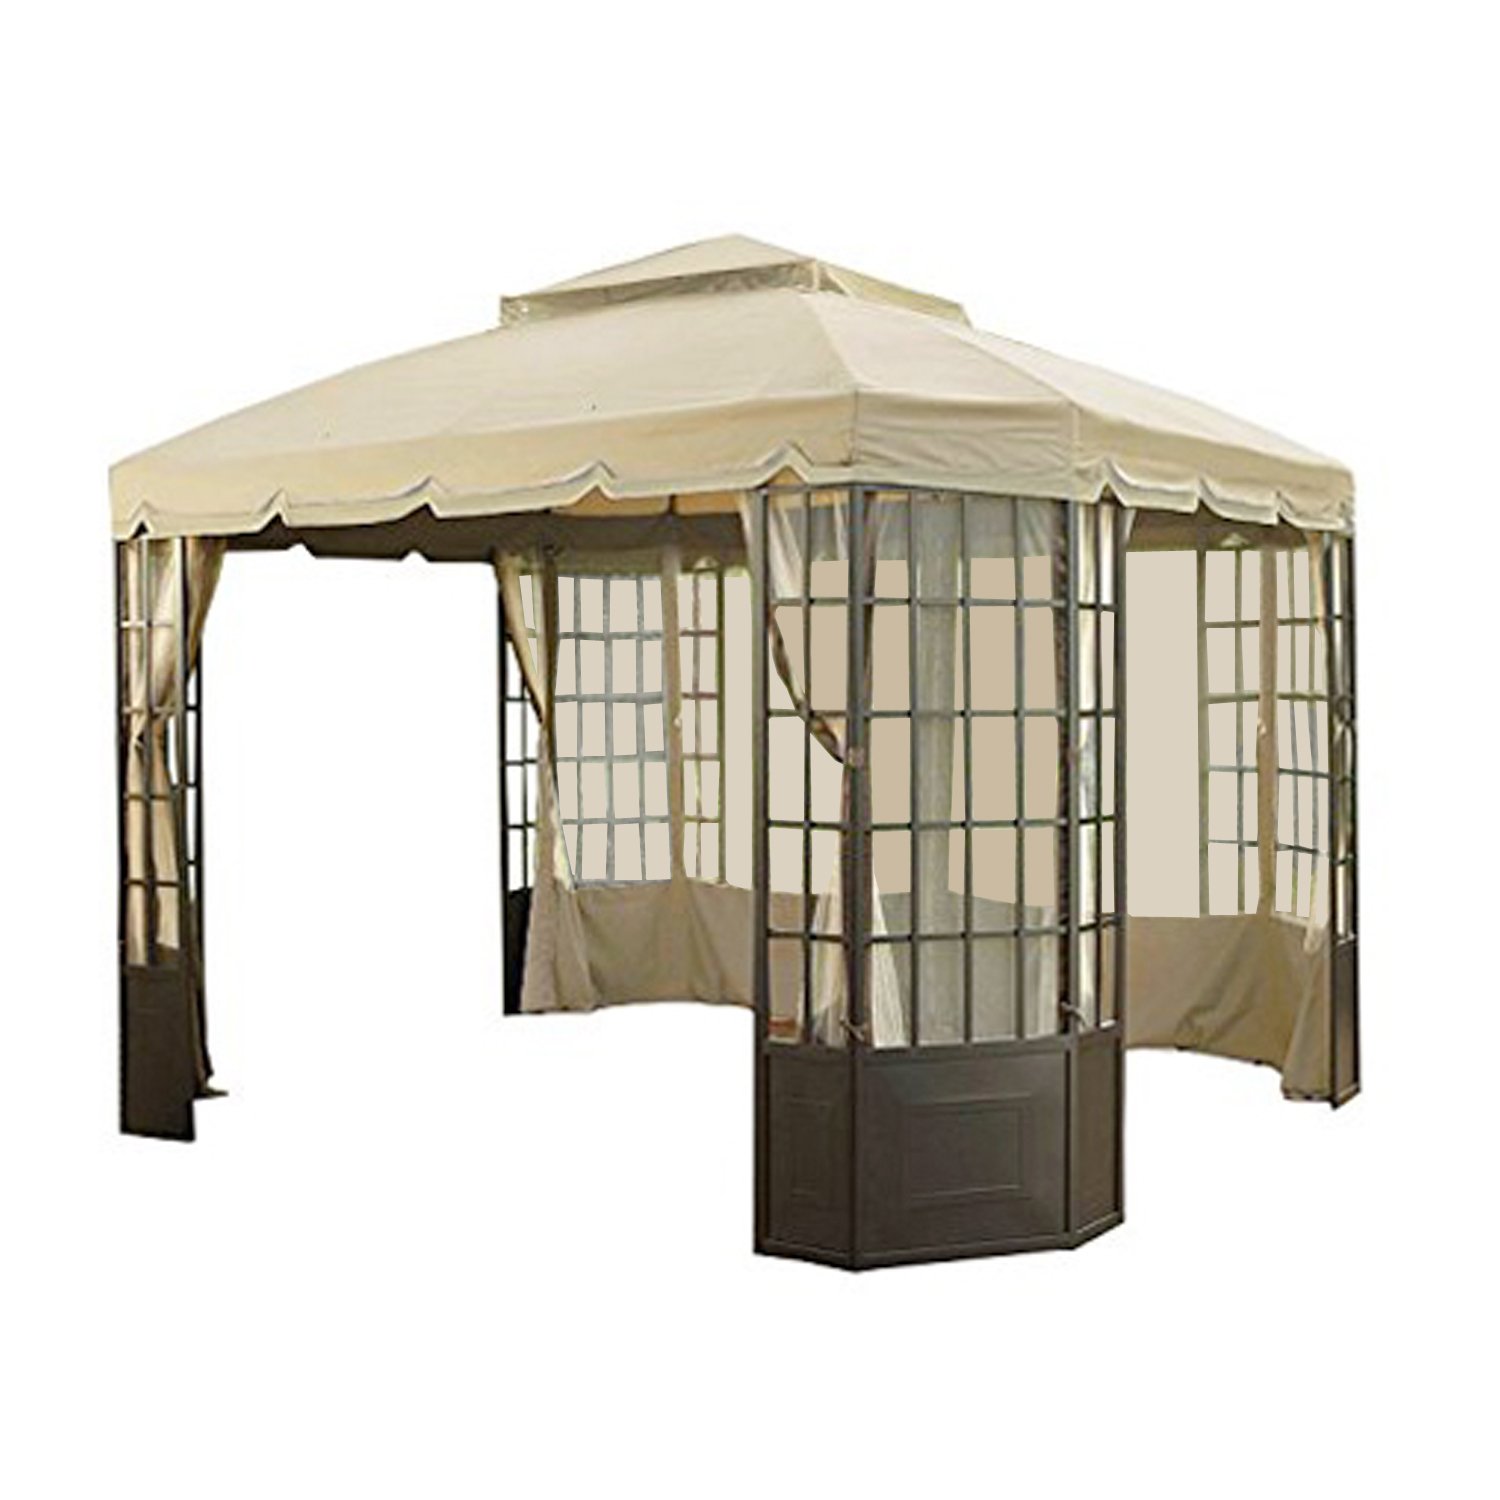 garden winds replacement canopy top cover for sears bay window gazebo - riplock 350 - beige